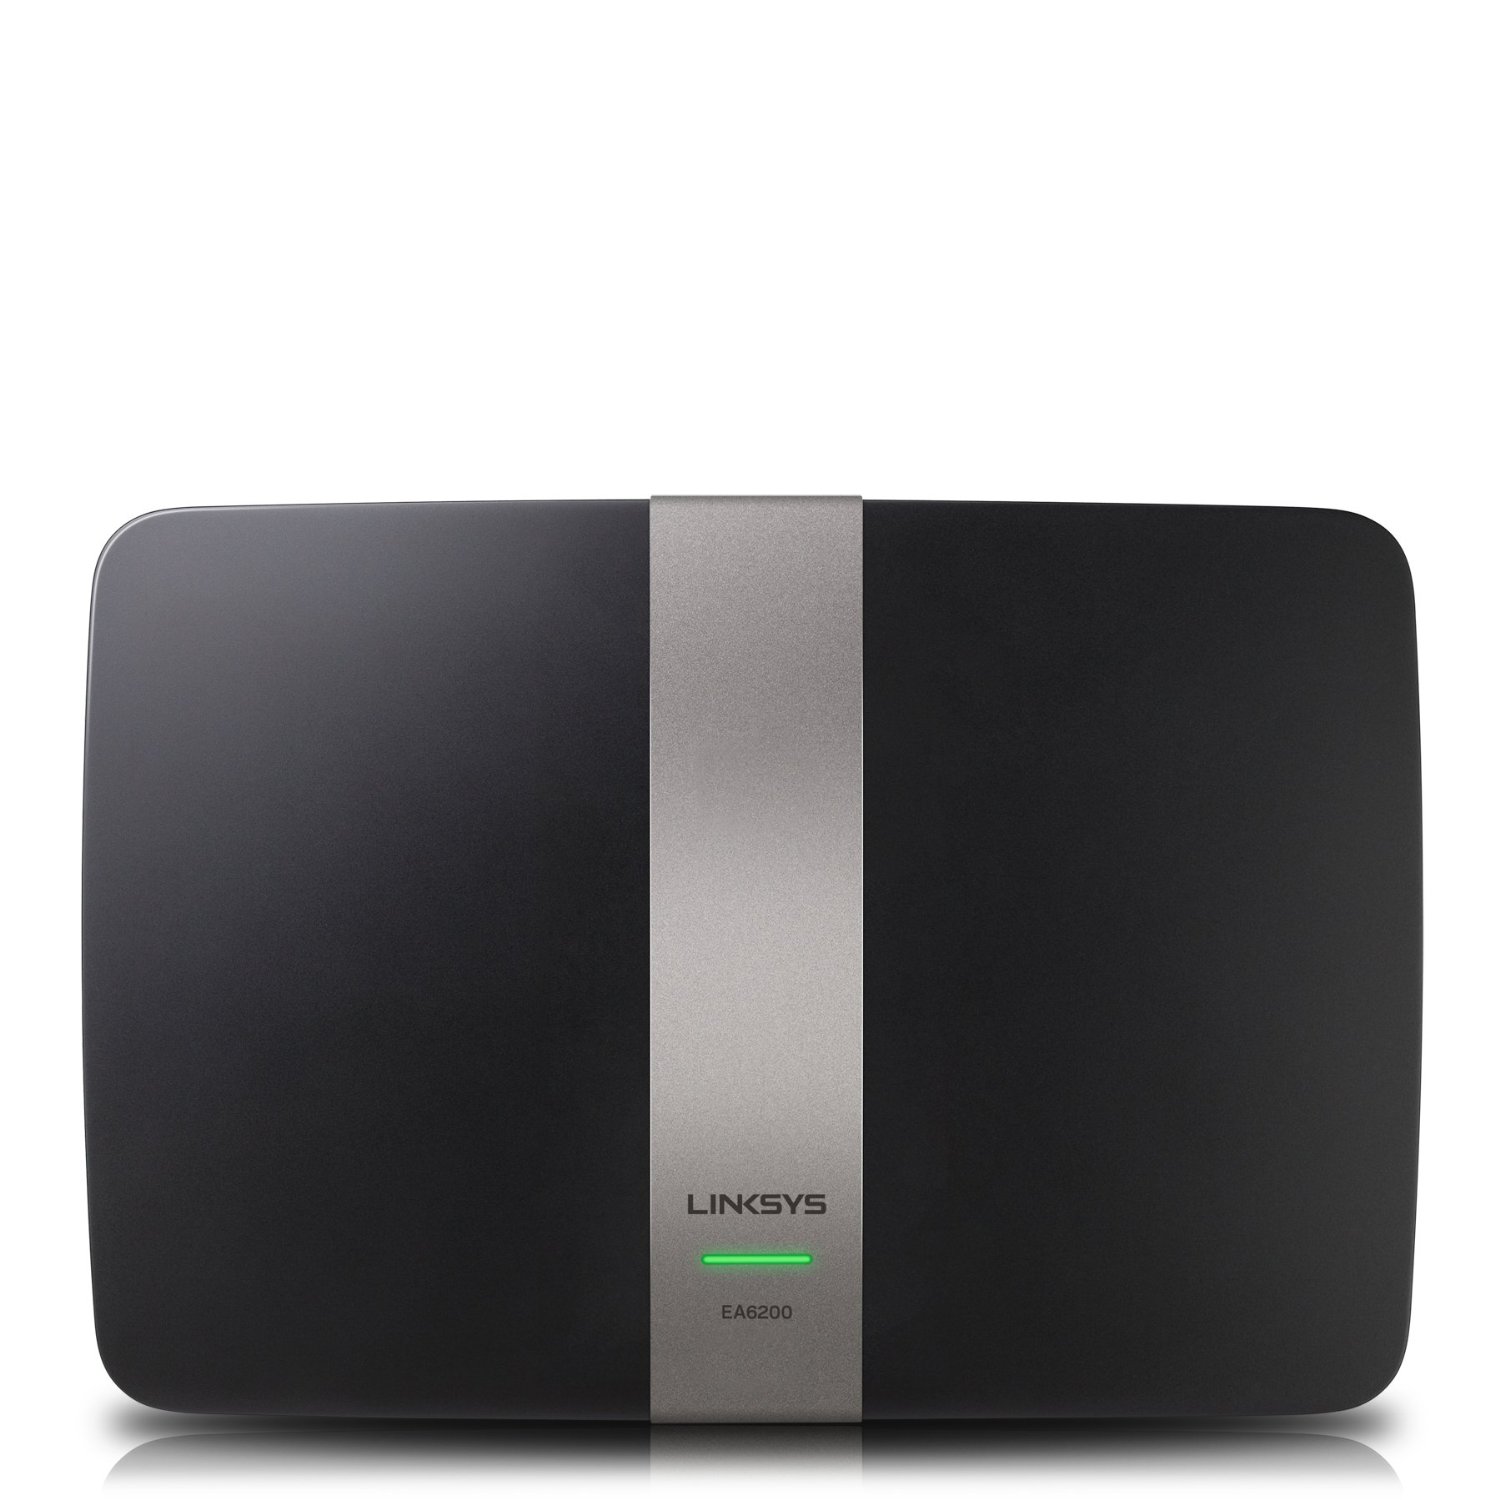 Linksys AC 900 Smart Wi-Fi Wireless Router